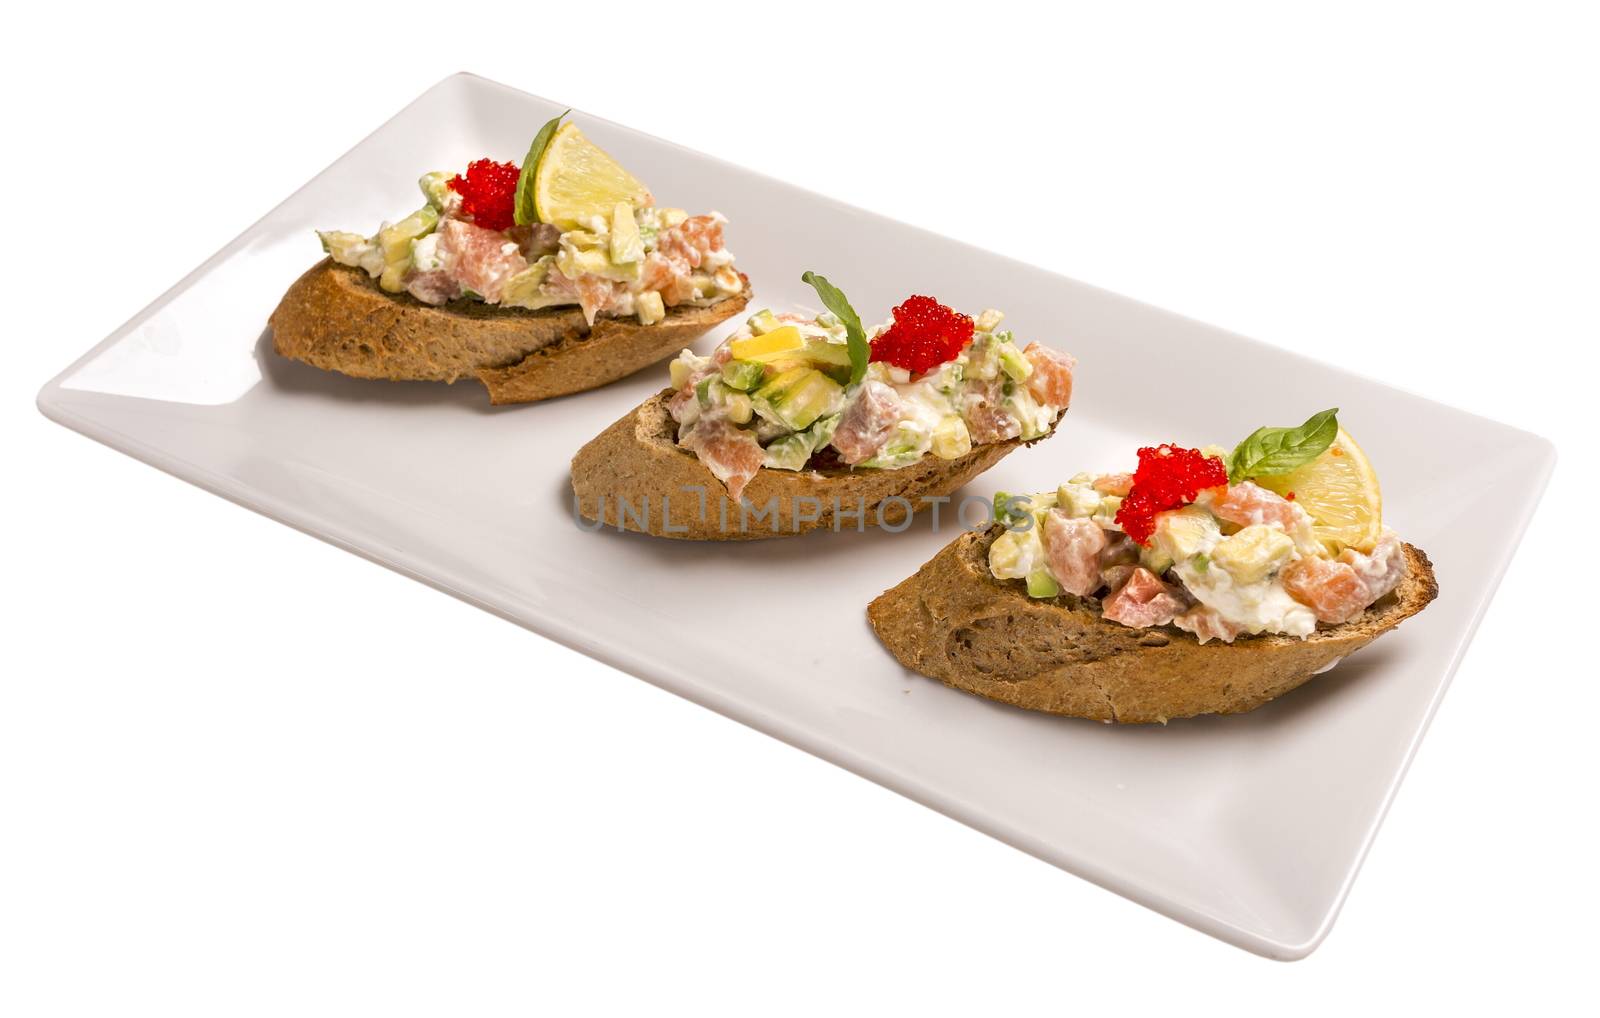 Bruschetta with salmon and avocado dried rye baguette, cream cheese, salmon, Tobiko caviar, avocado, basil . Isolated image on white background.